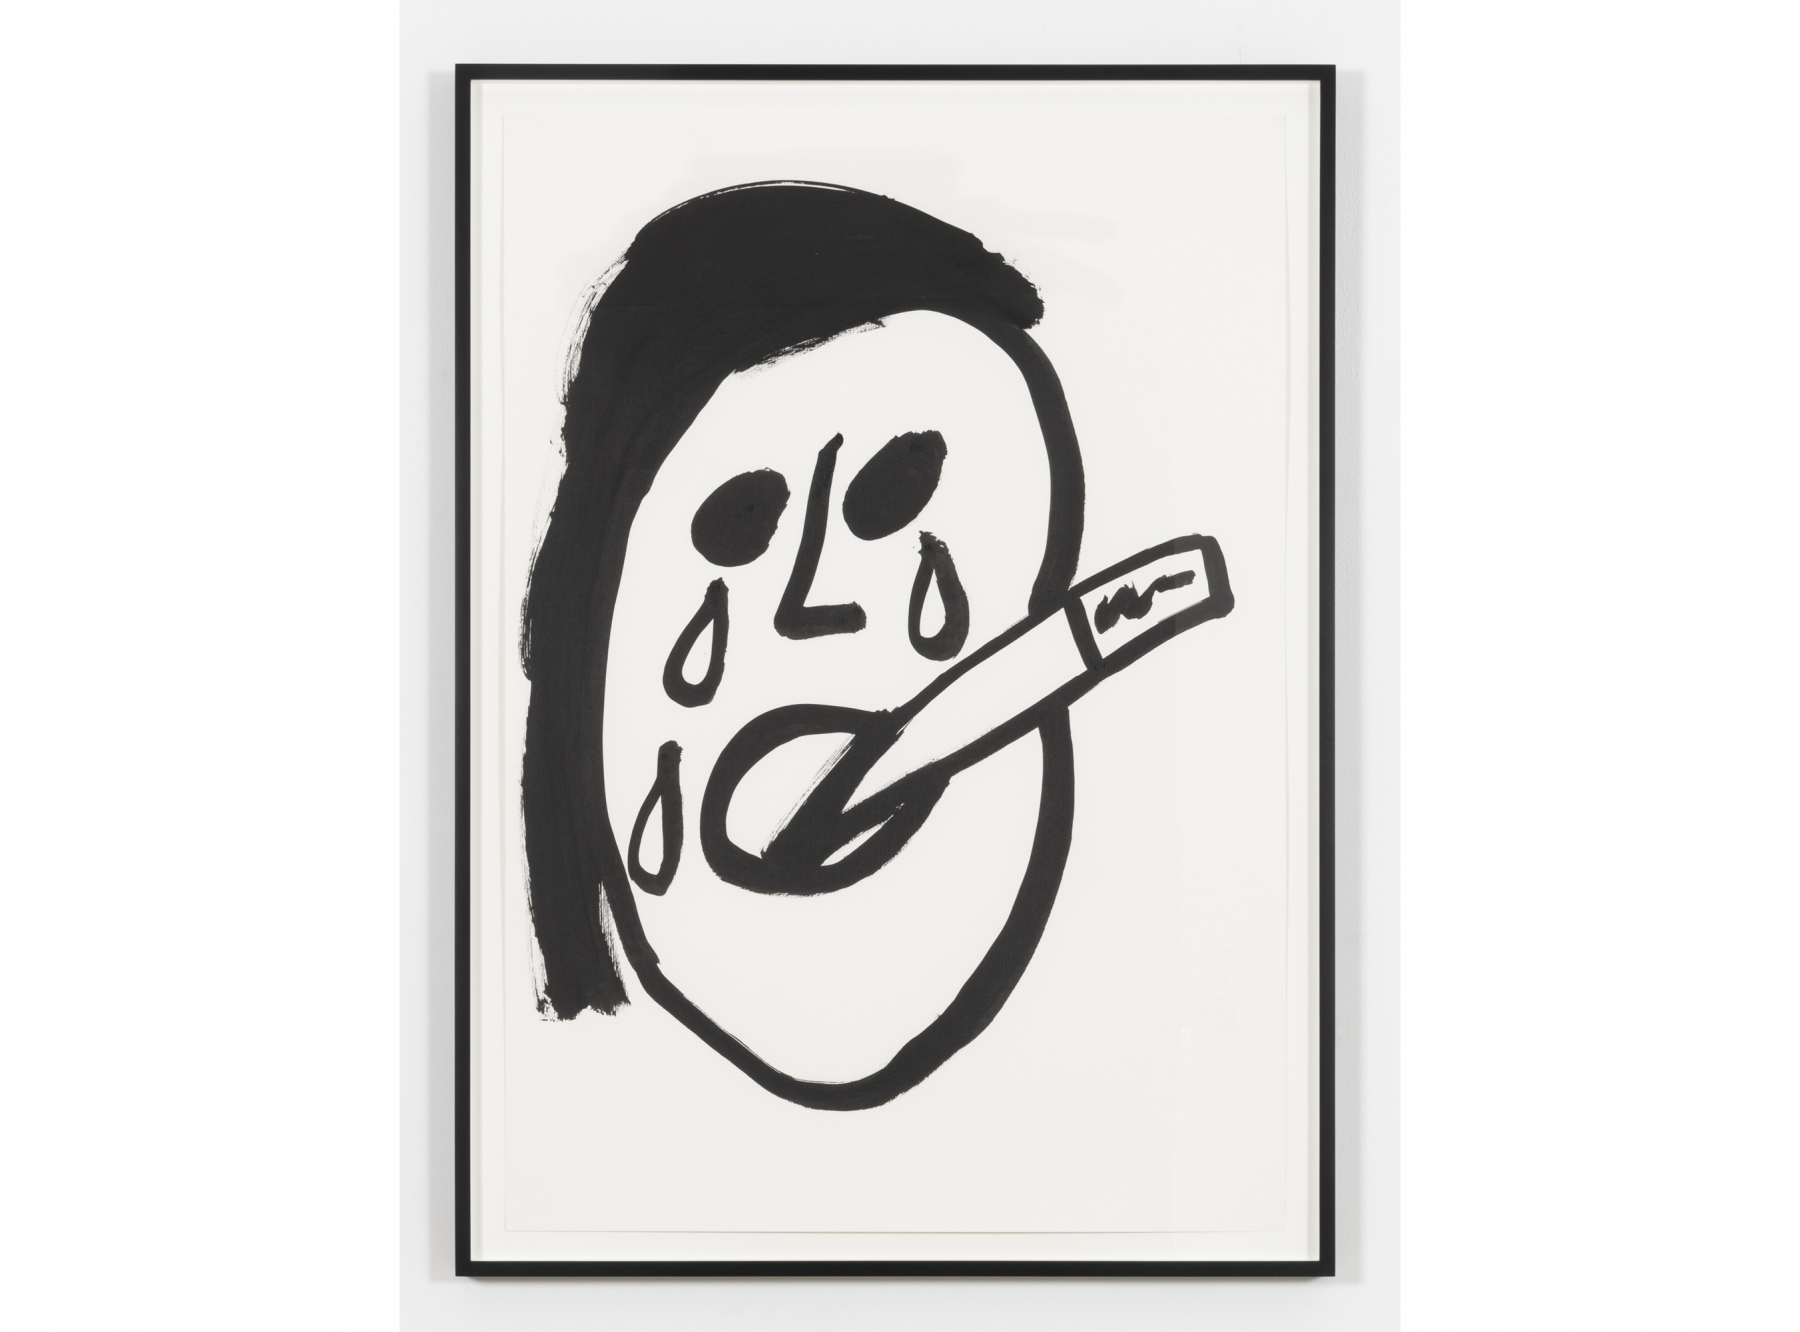 Paul Chan

die Grippe (Krankheit) [flu (illness)], 2020

Ink on paper

Paper: 39 1/4 x 27 1/2 inches (99.7 x 69.9 cm)

Frame: 42 1/2 x 30 7/8 x 1 1/2 inches (108 x 78.4 x 3.8 cm)